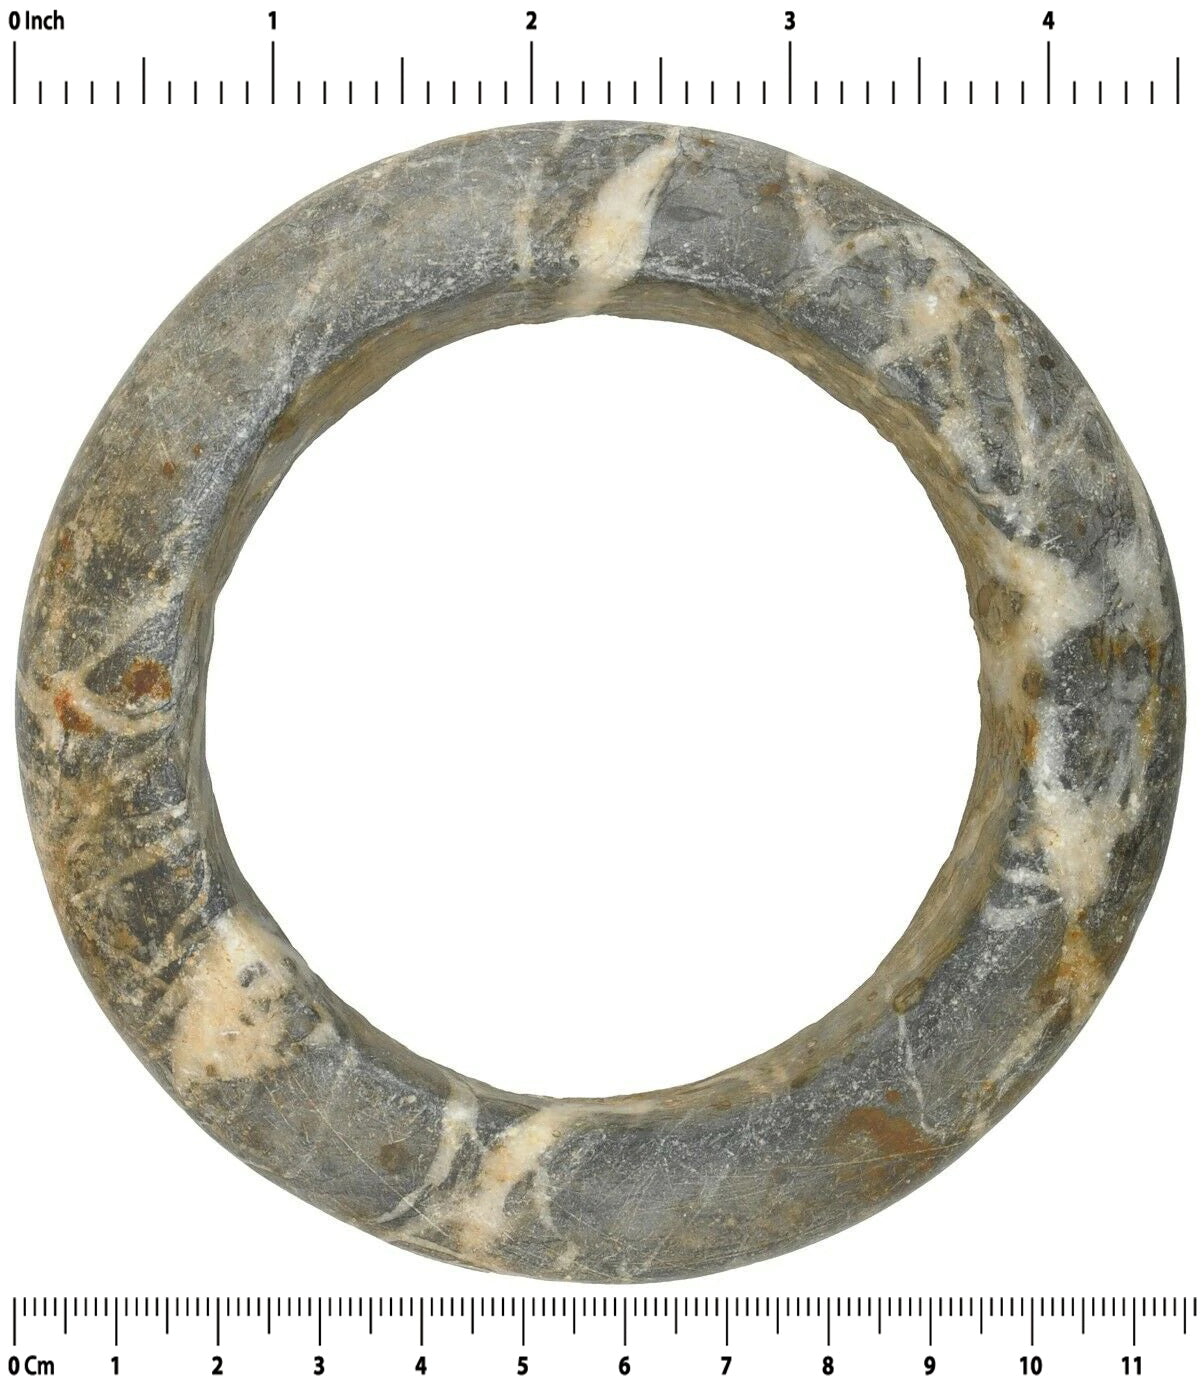 Antique stone granite bracelet Armband Currency African Mali Dogon Boho jewelry - Tribalgh